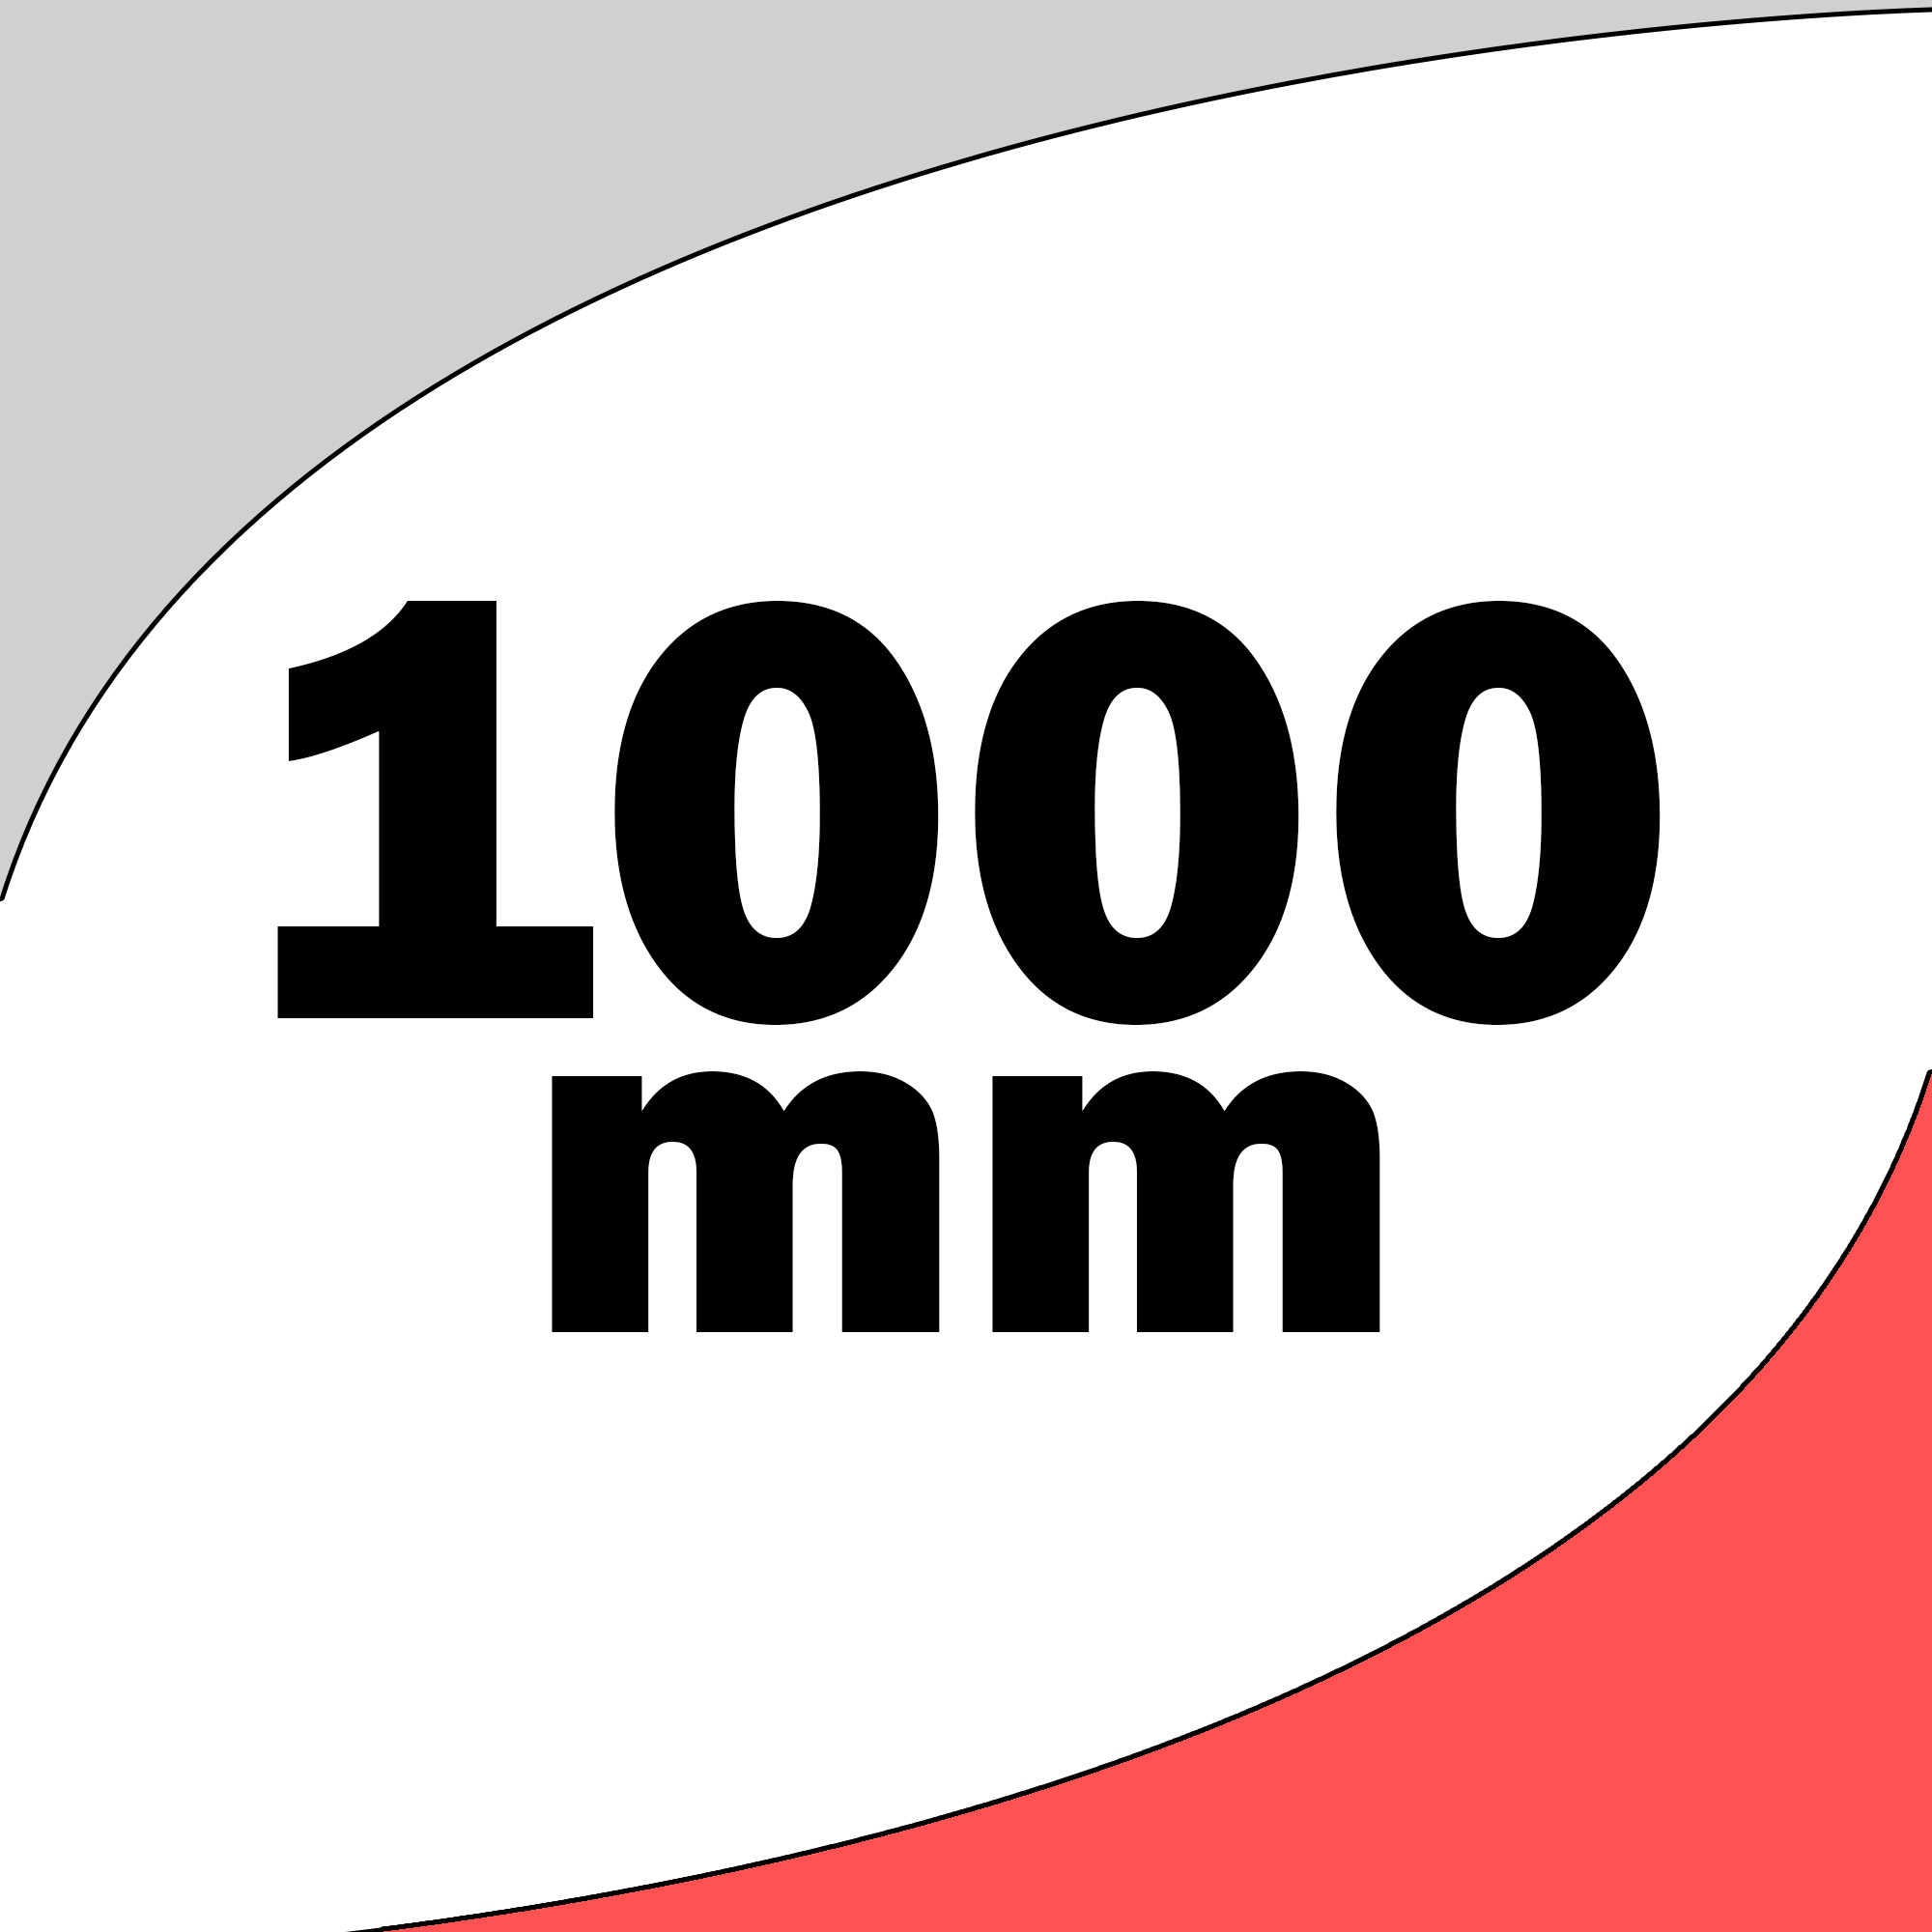 1.000 mm